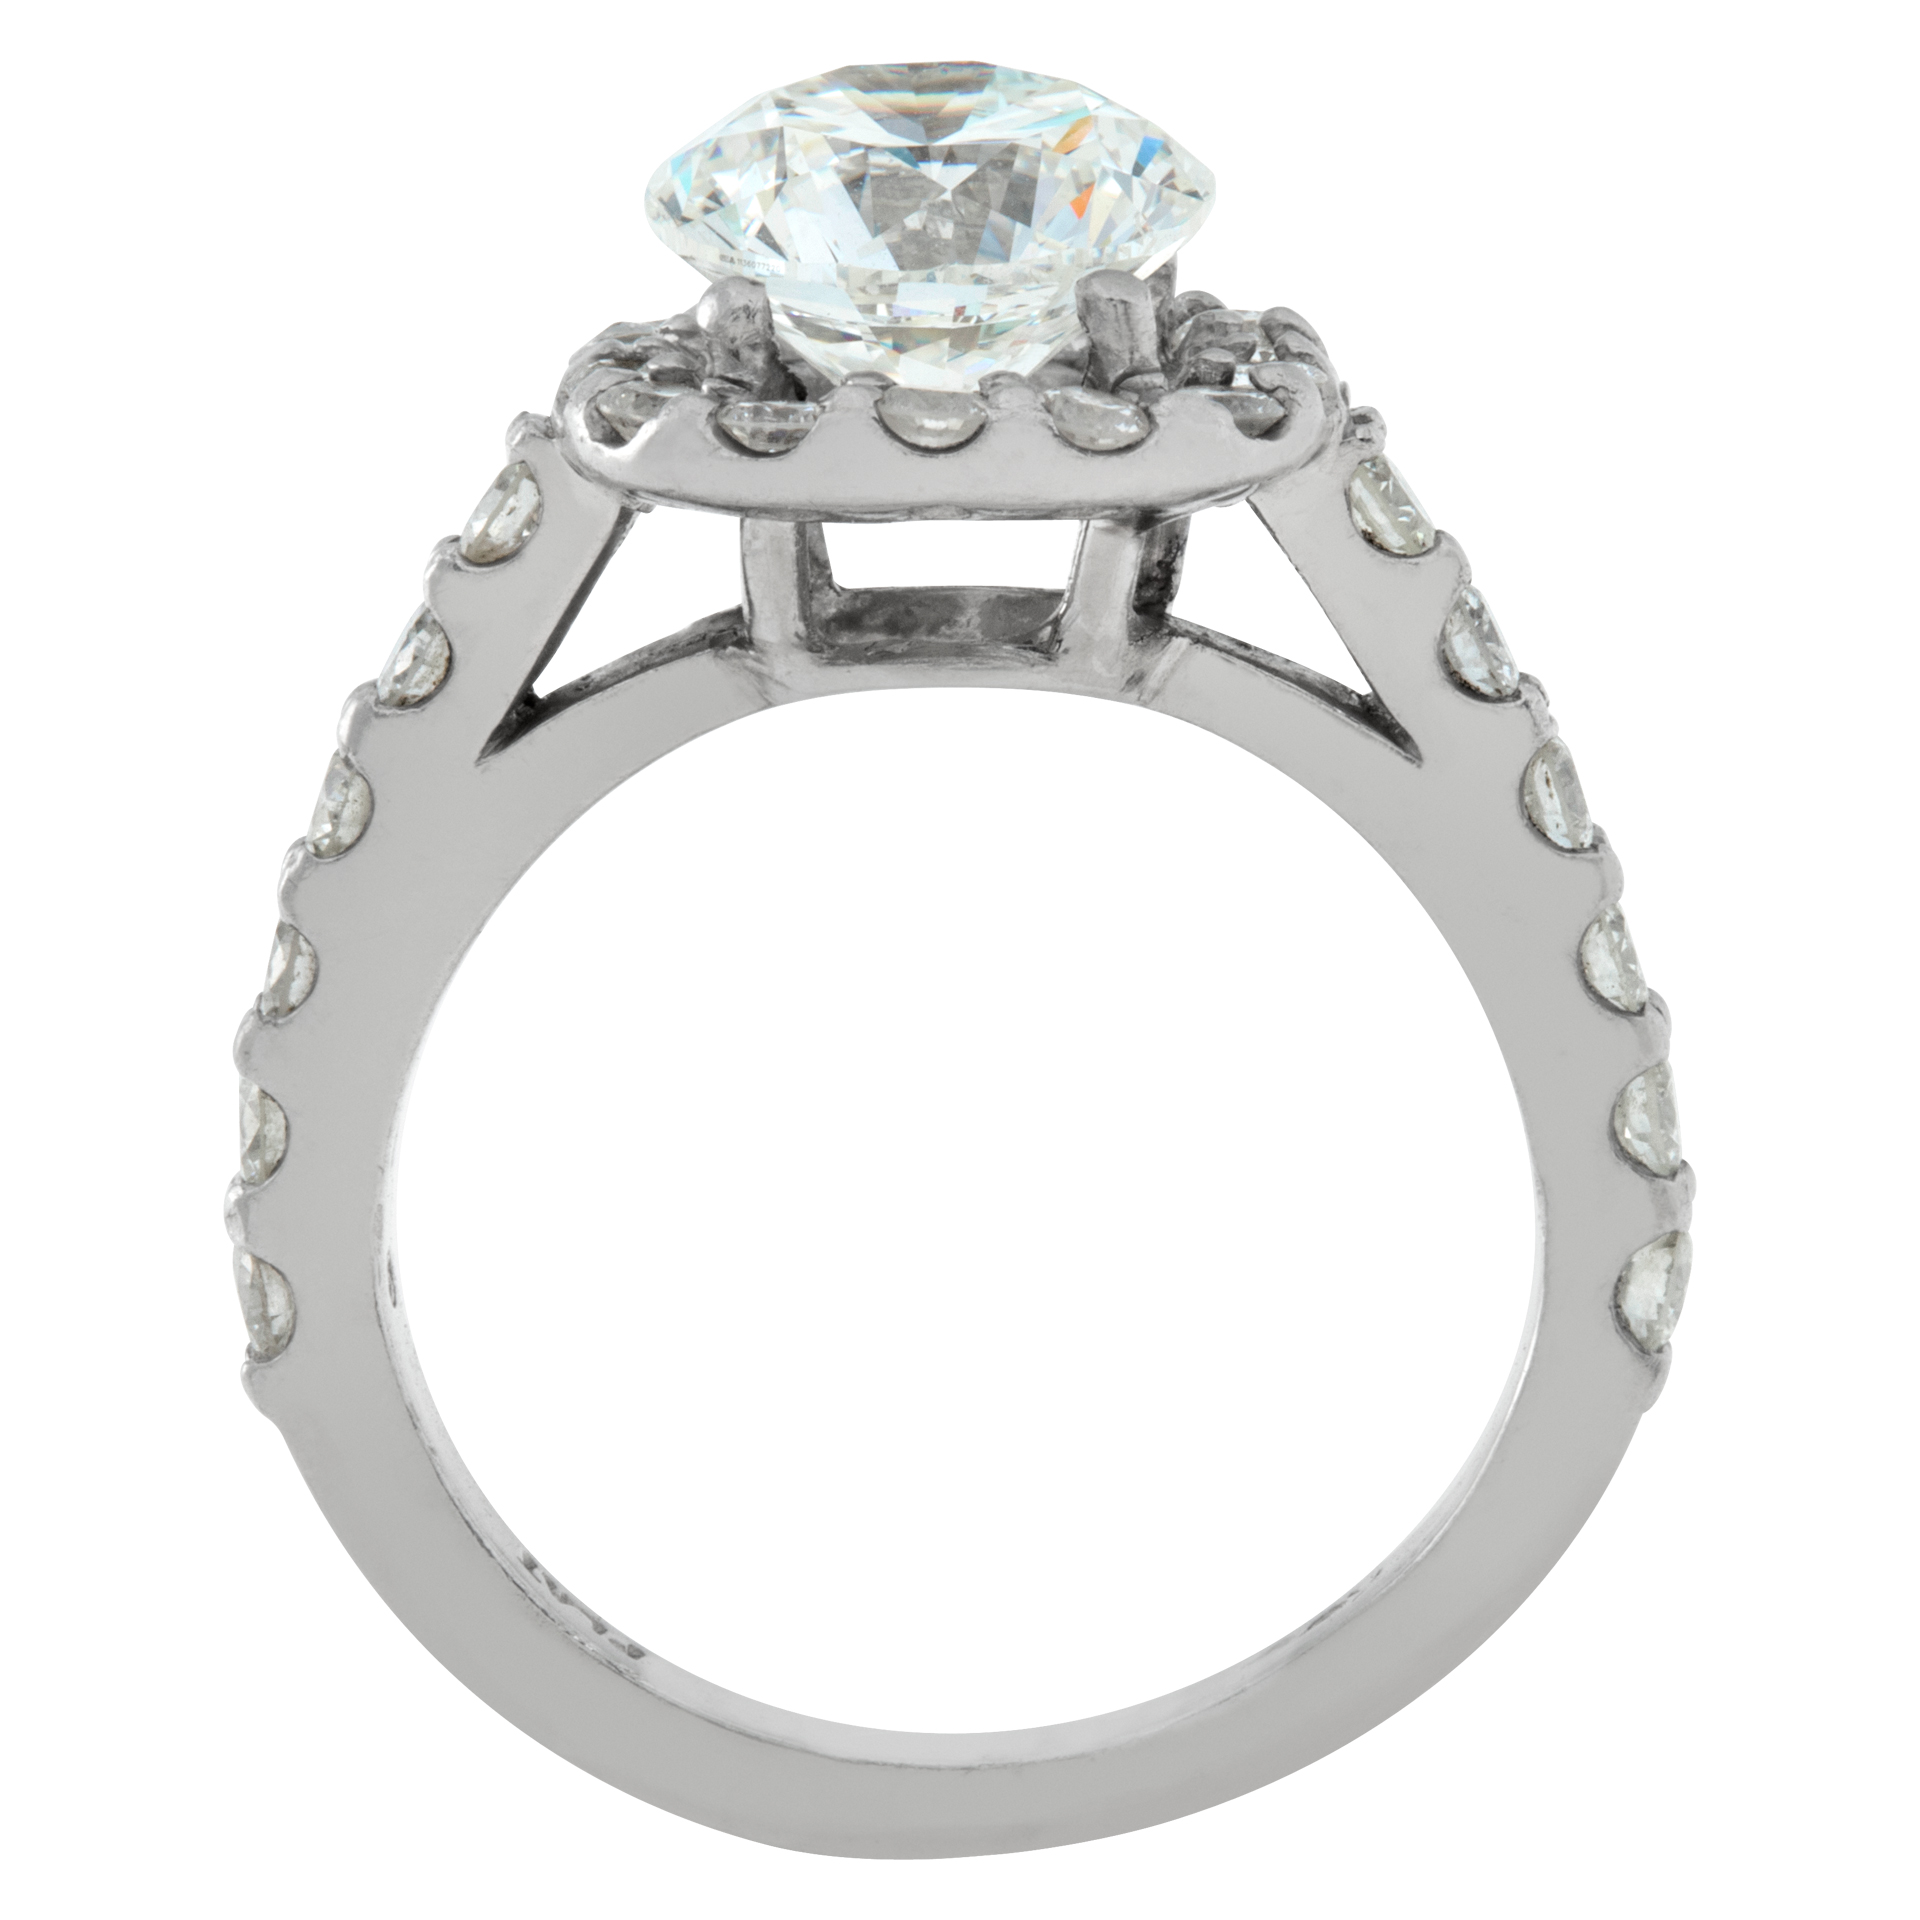 GIA certified round brilliant cut diamond 2.03 carat ( I color, SI1 clarity) ring set in platrinum image 4